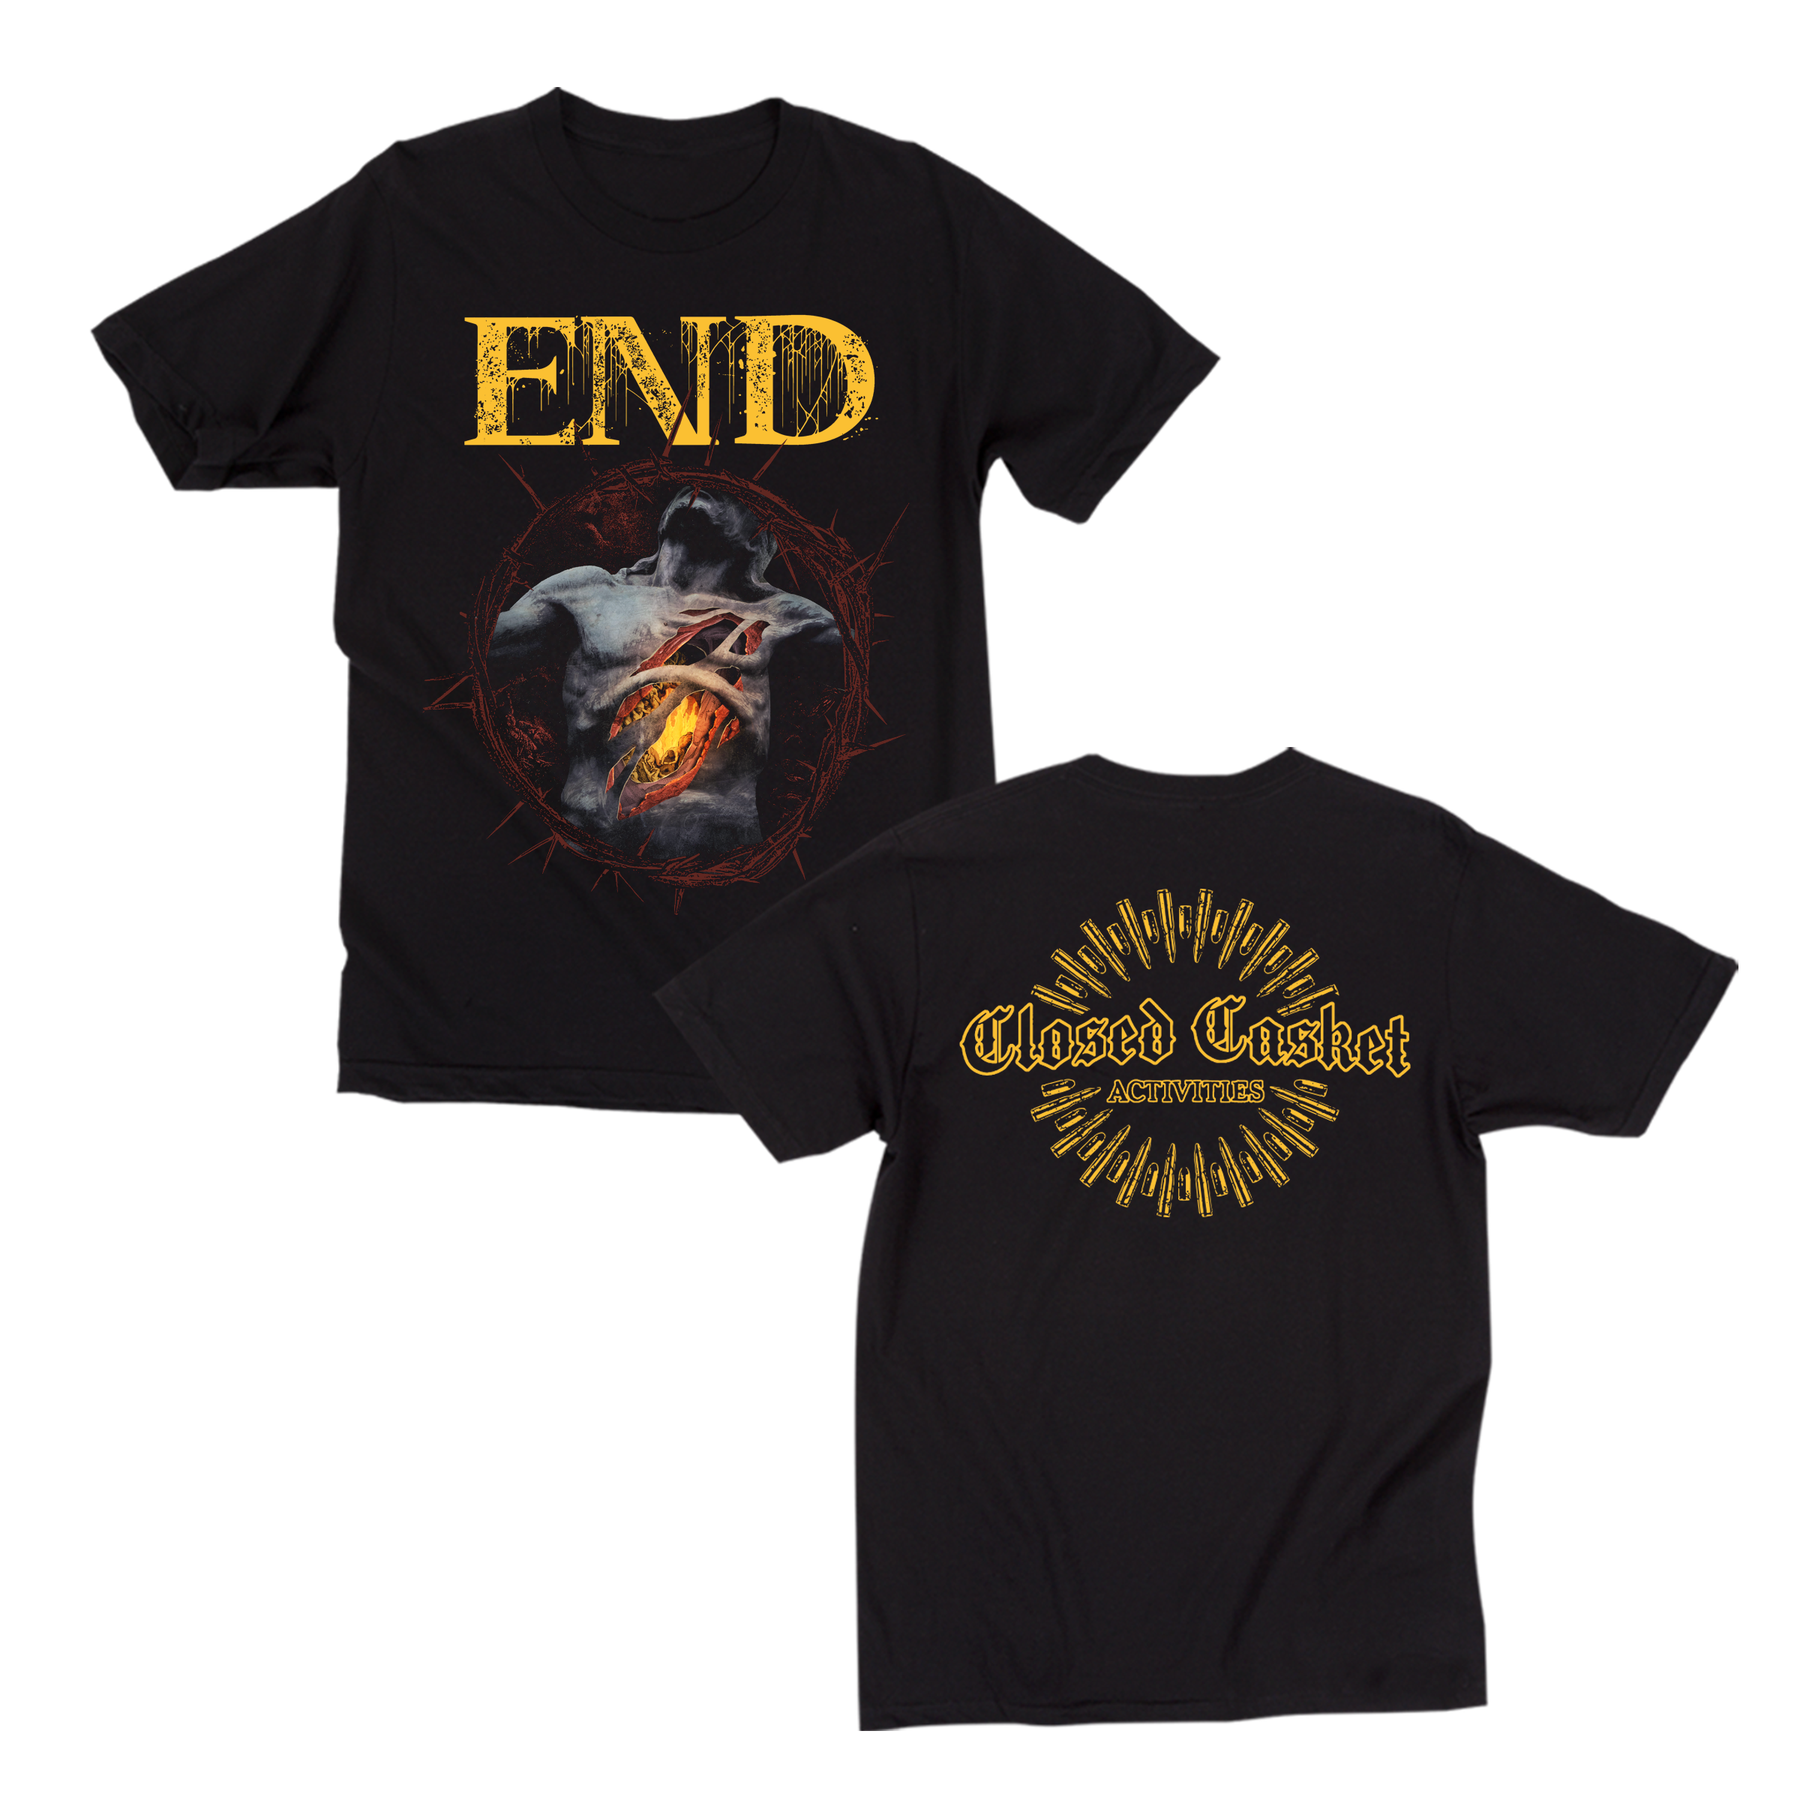 END - The Sin of Human Frailty T-Shirt